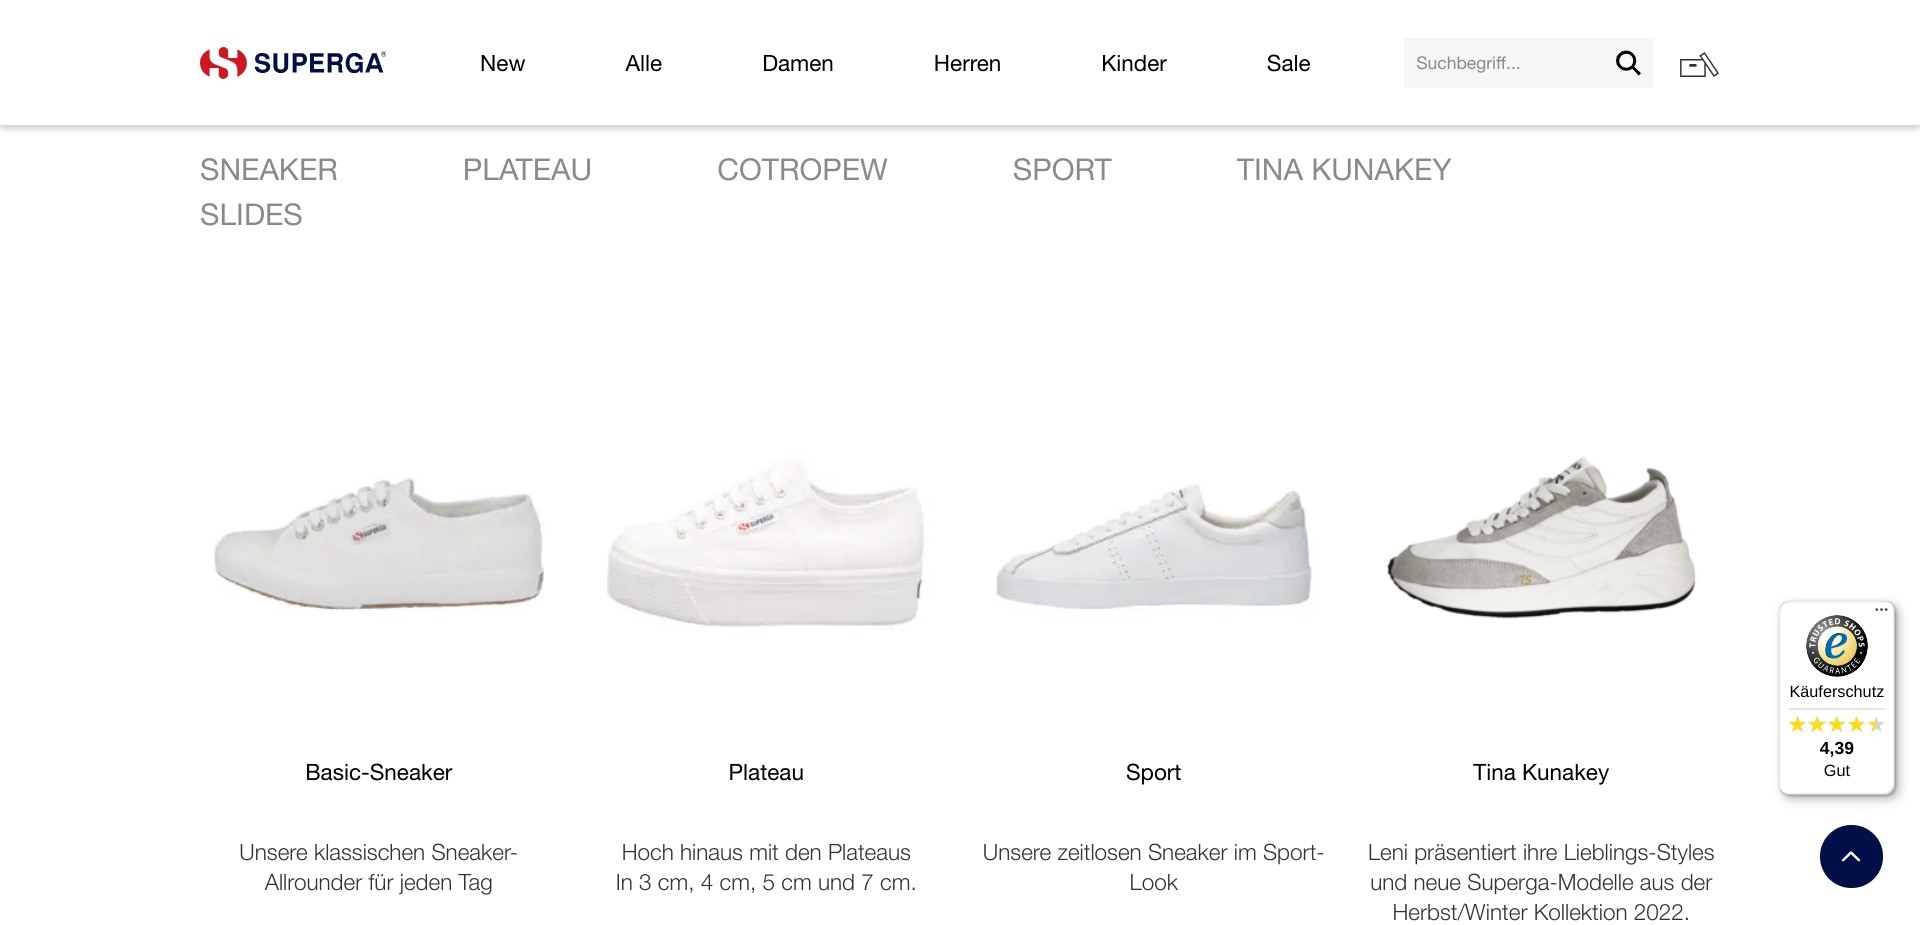 Screenshot of random product listings on superga.de